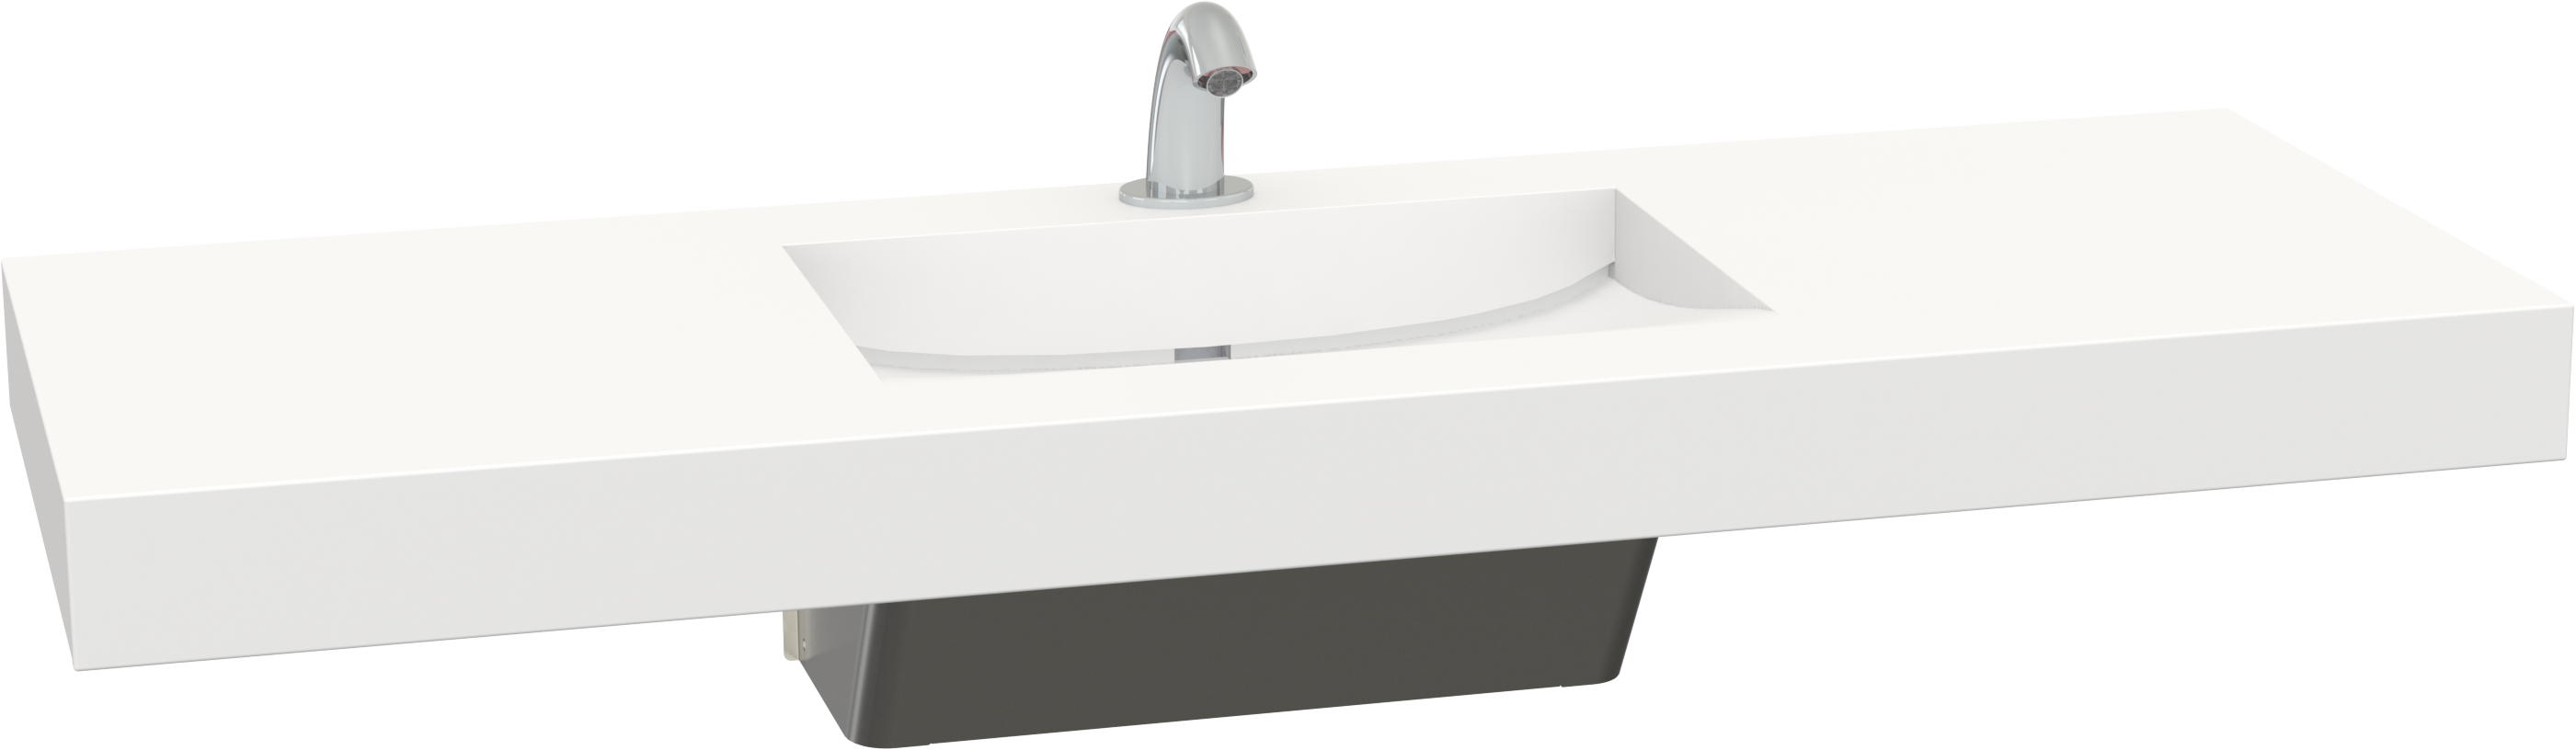 SLV01 - Single User Streamlav View Solid Surface Handwashing Lavatory